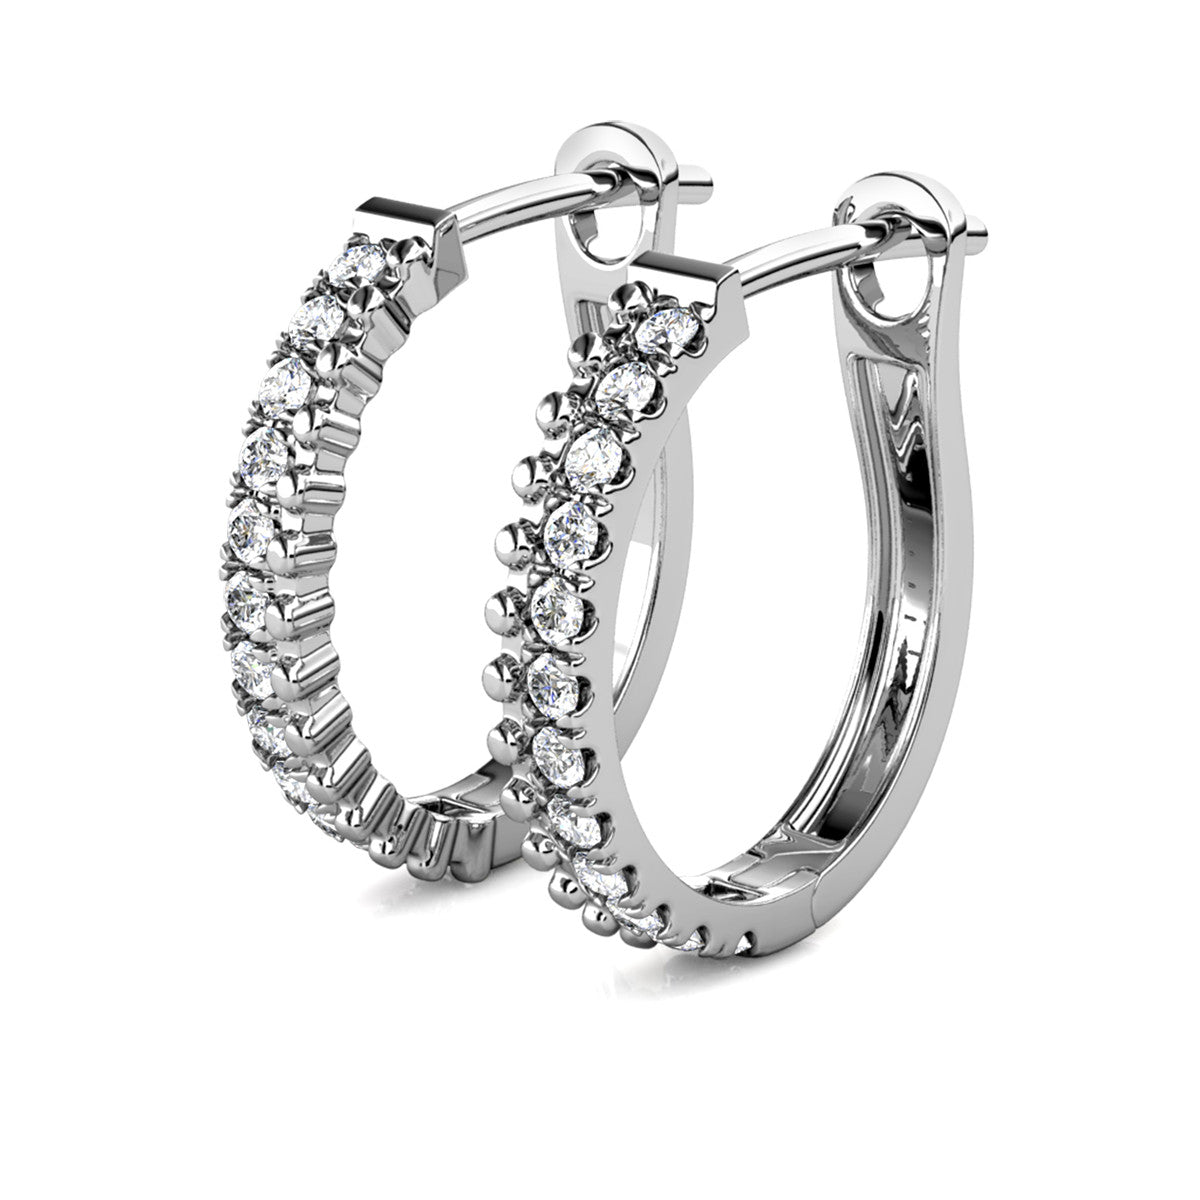 Teagan 18k White Gold Plated Crystal Hoop Earrings for Women